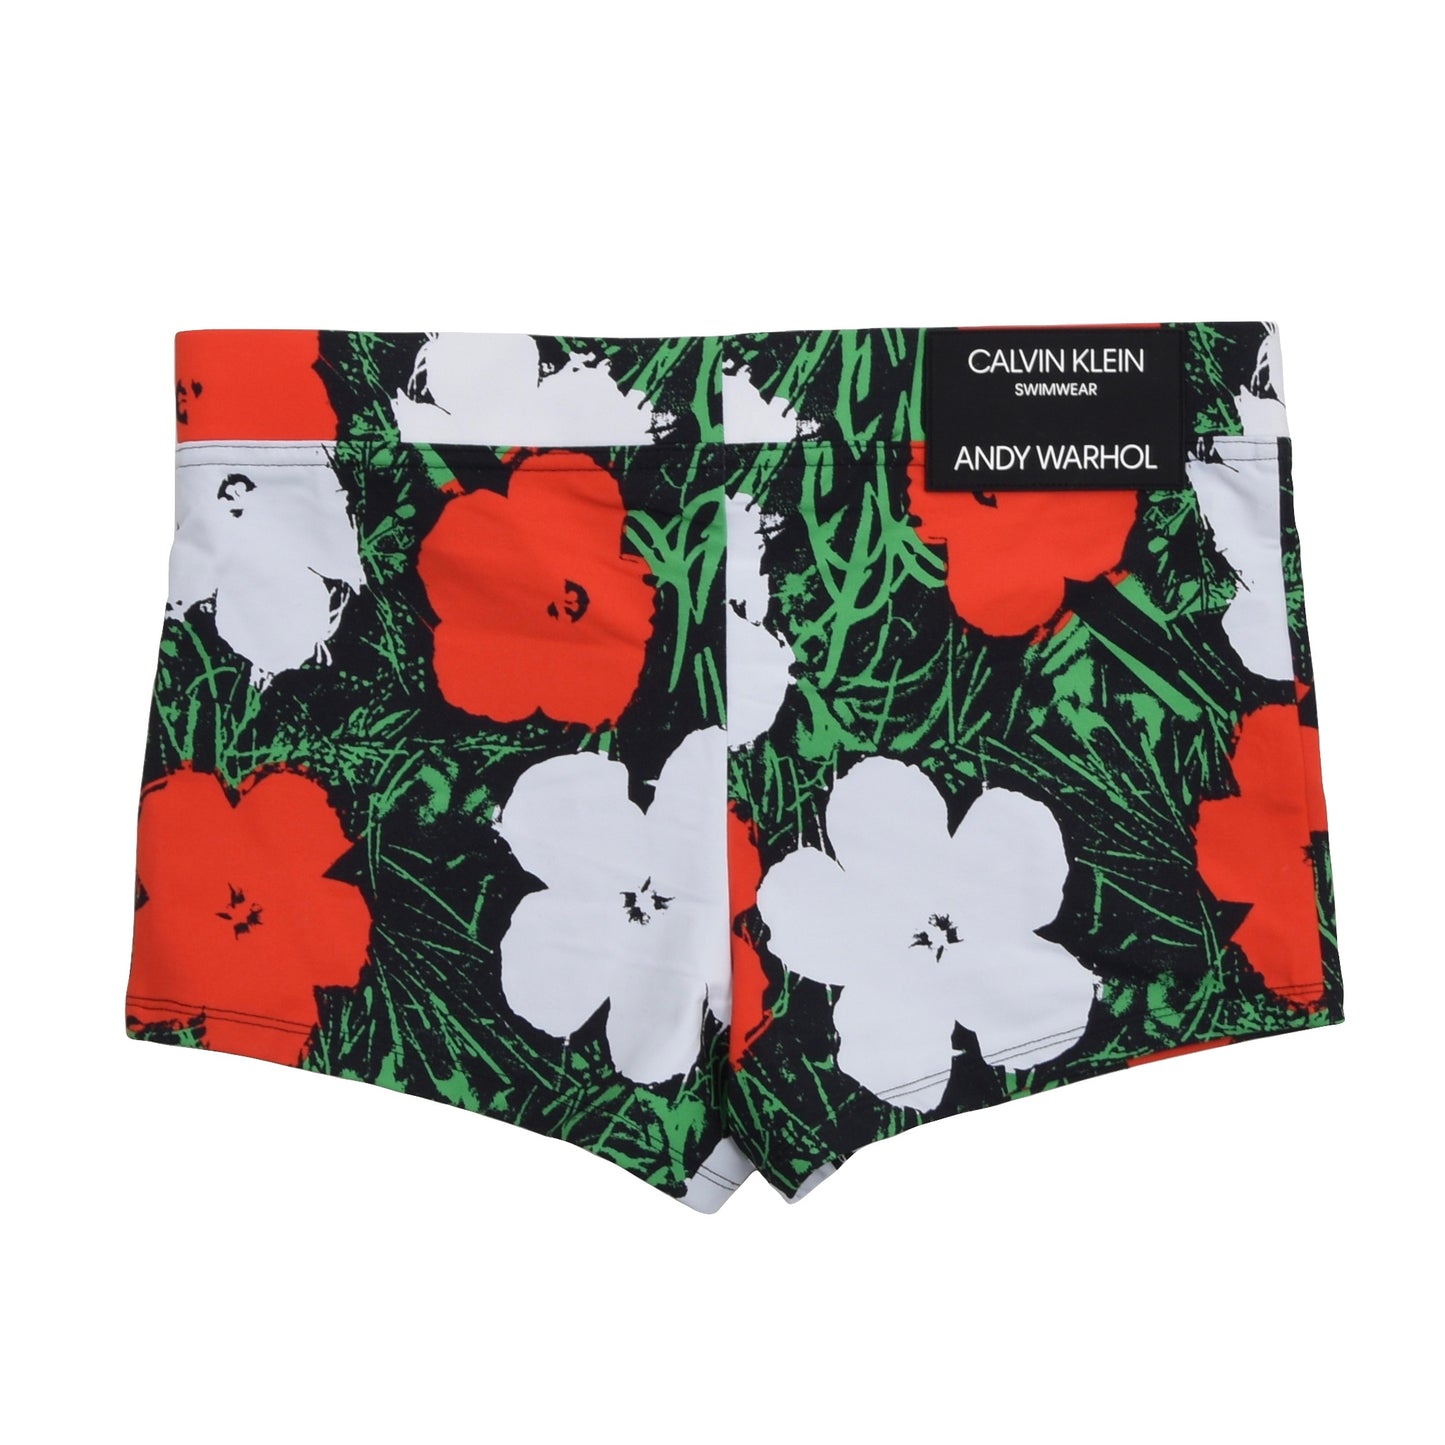 Andy Warhol x Calvin Klein Swim Shorts Size M - Red & Green Hibiscus